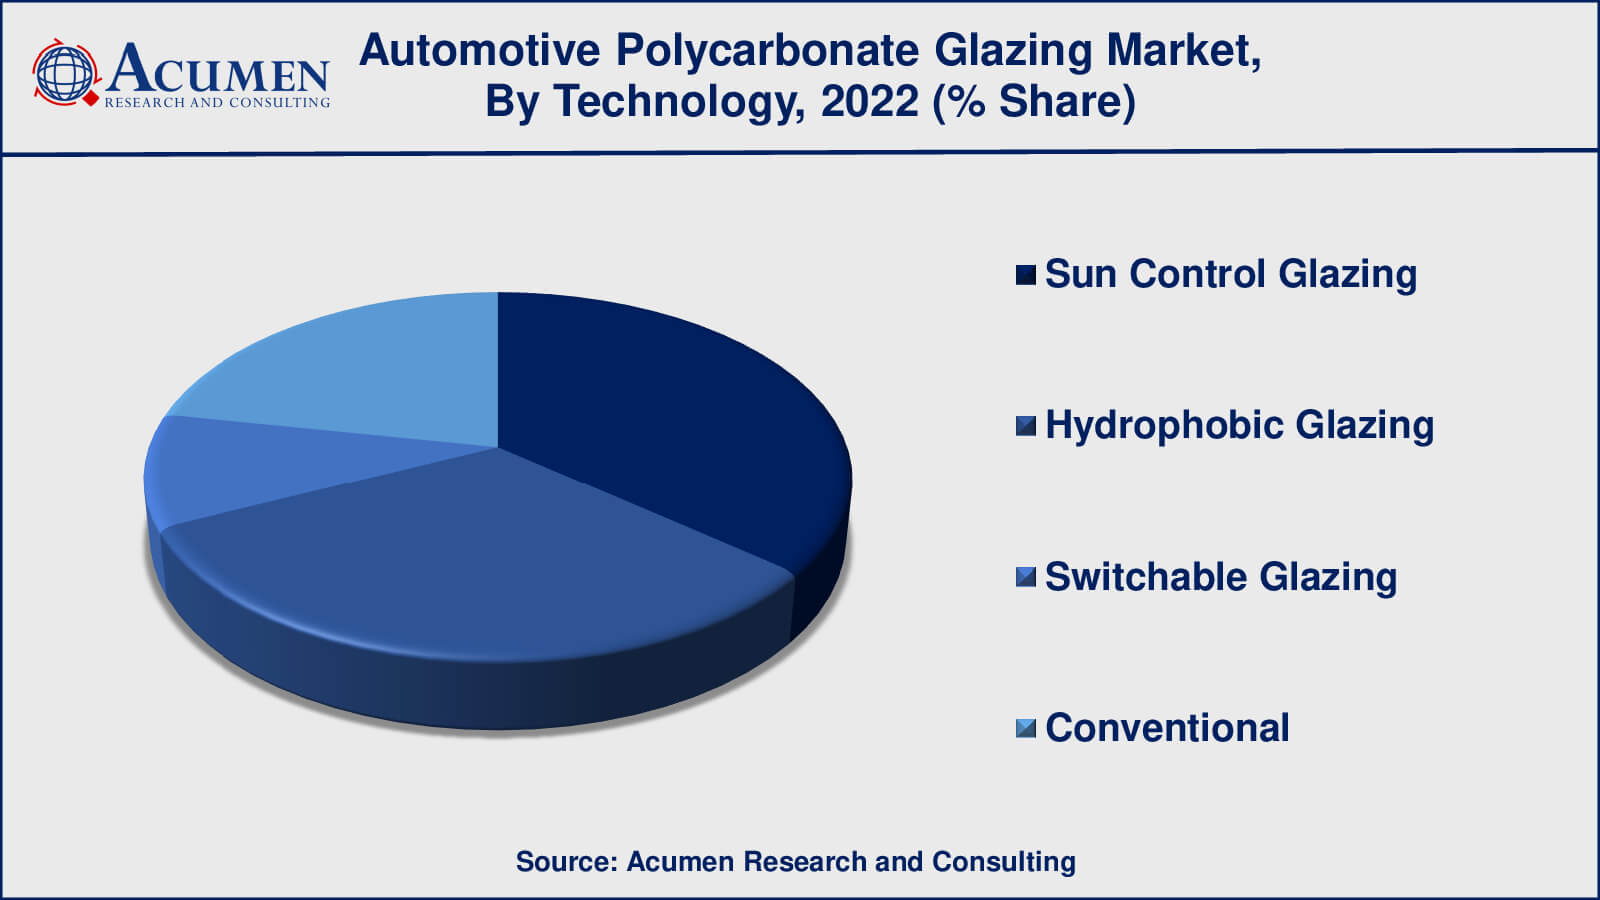 Automotive Polycarbonate Glazing Market Drivers